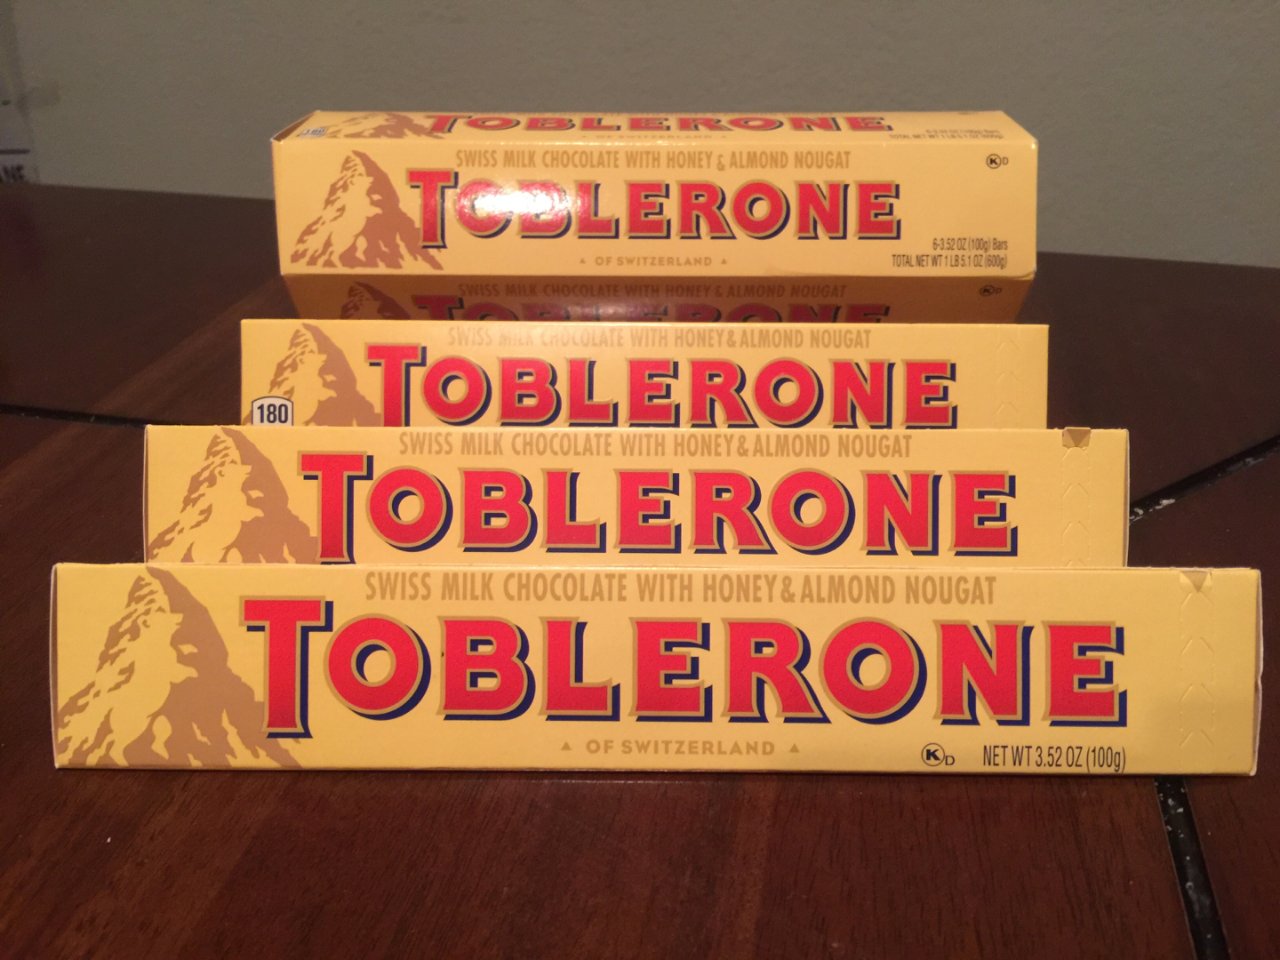 Toblerone 瑞士三角